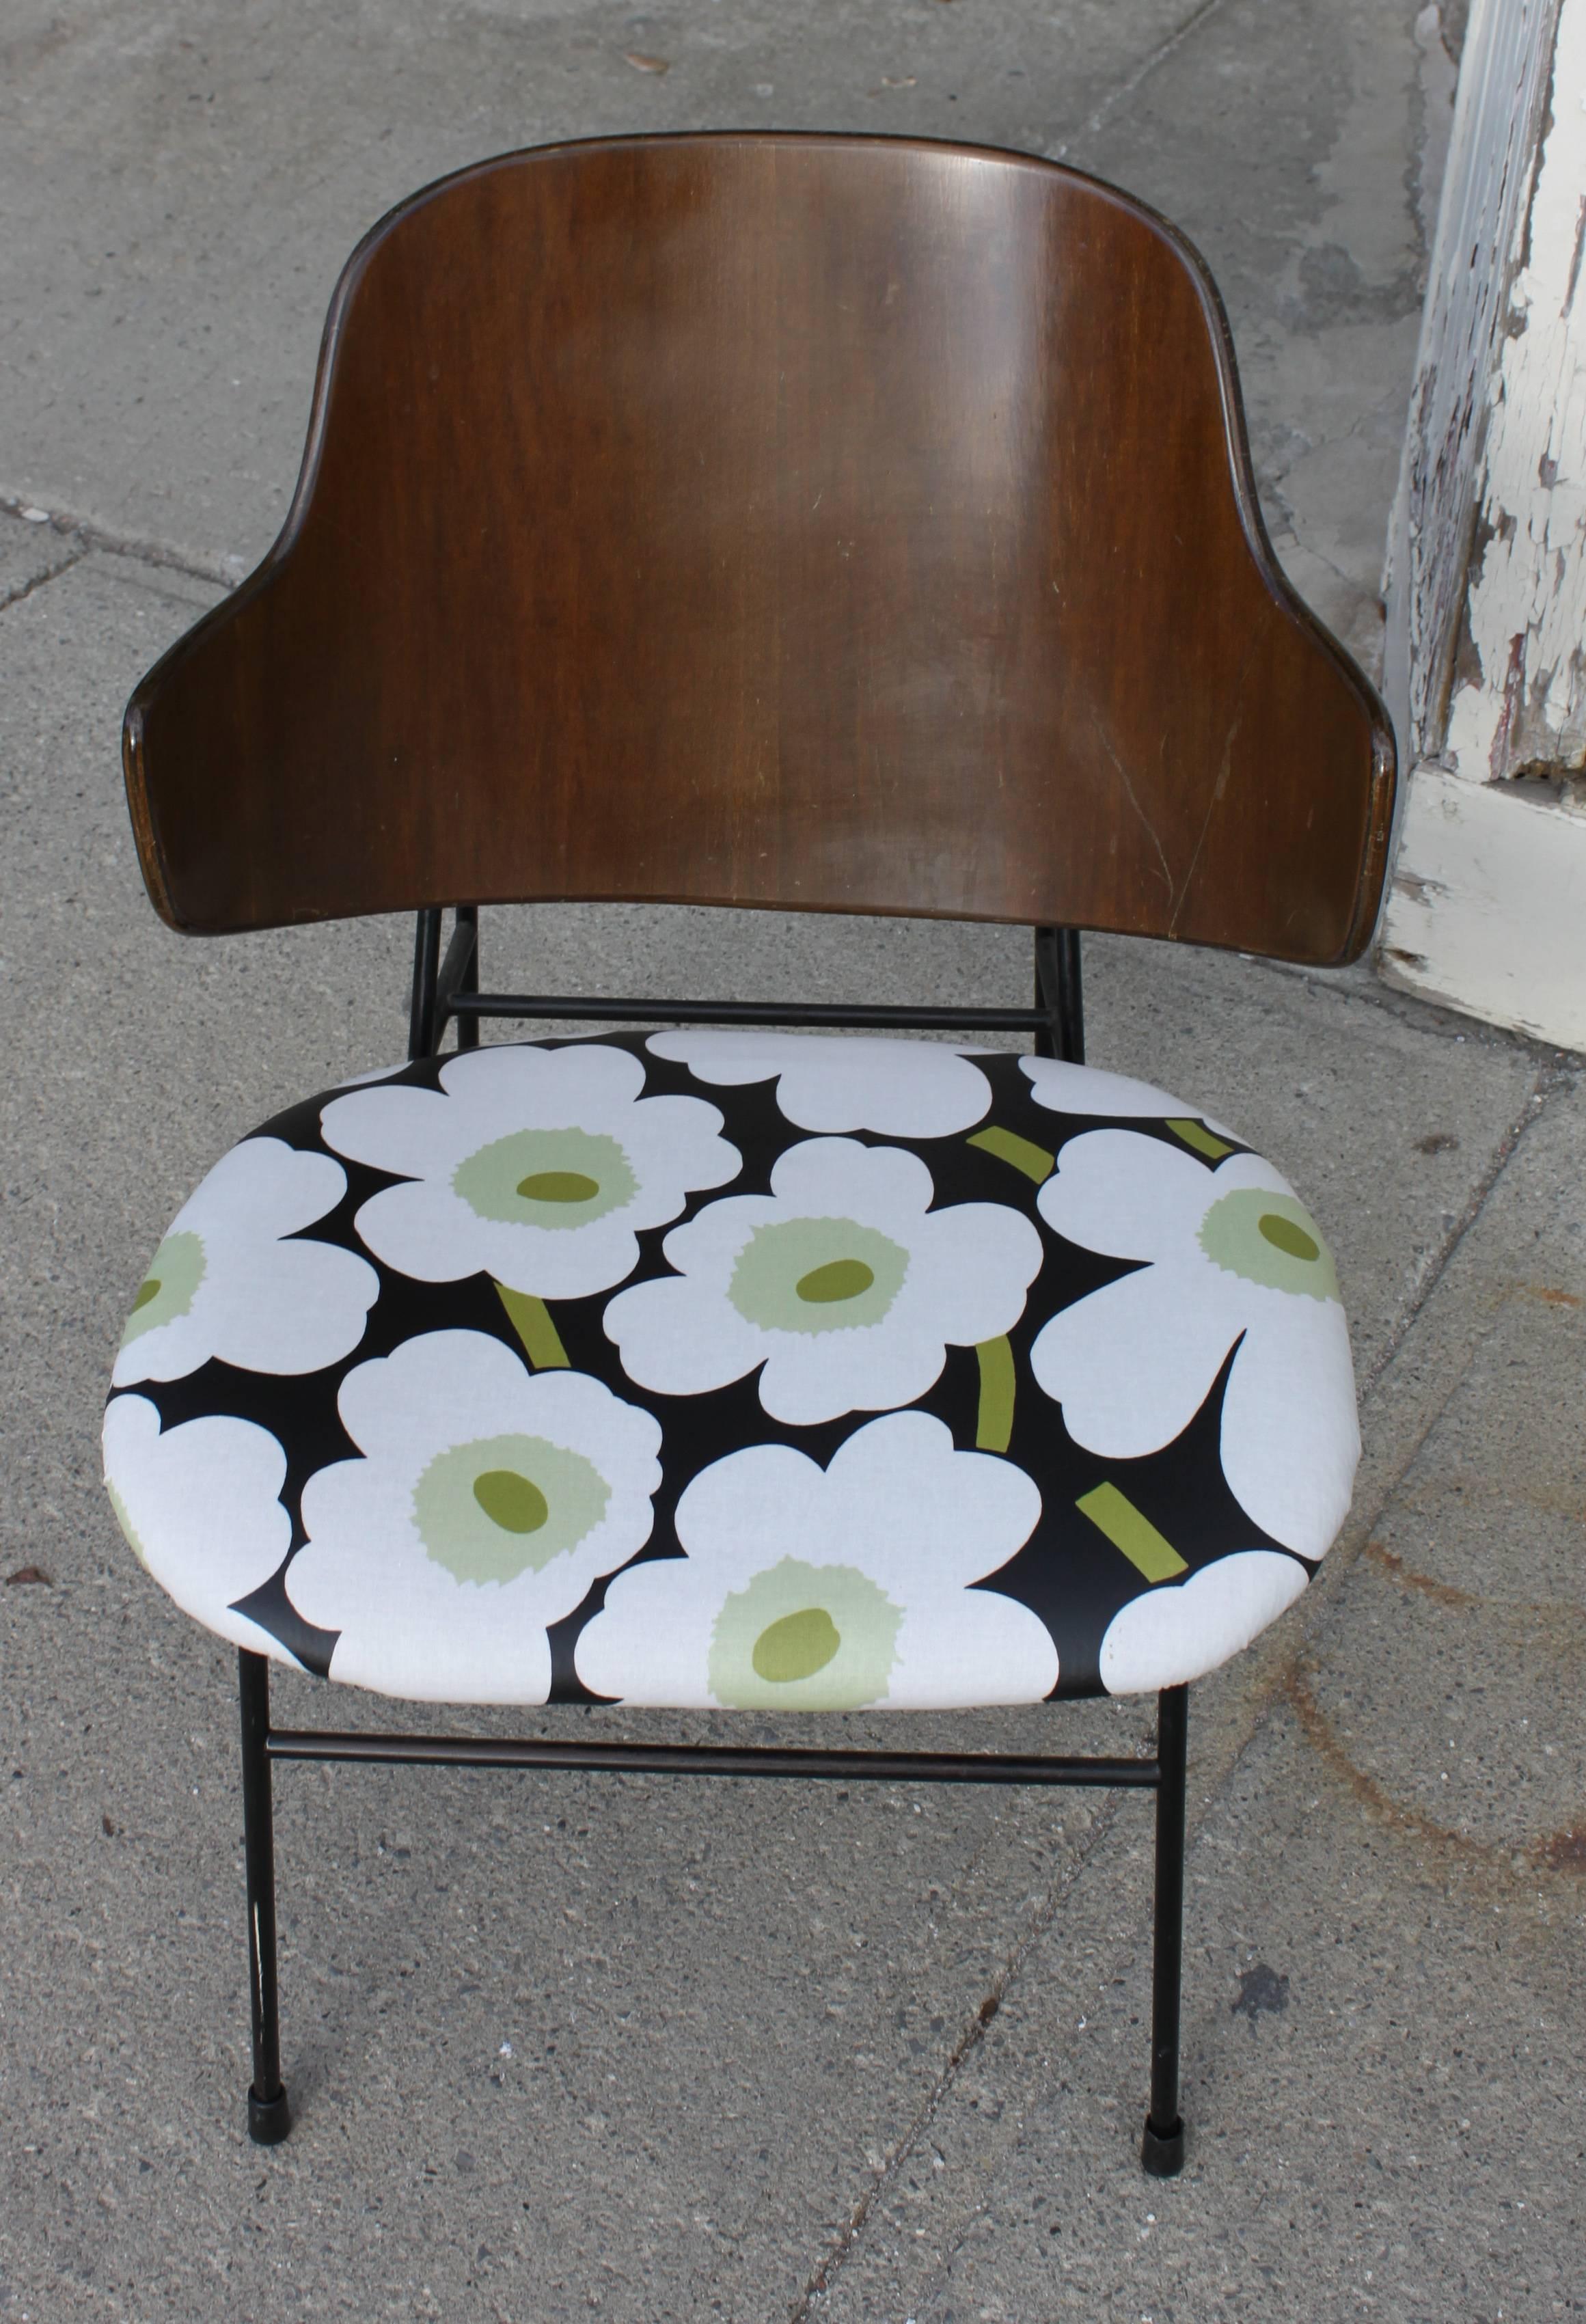 Ib Kofod Larsen 'Penguin' chair with marimekko fabric.